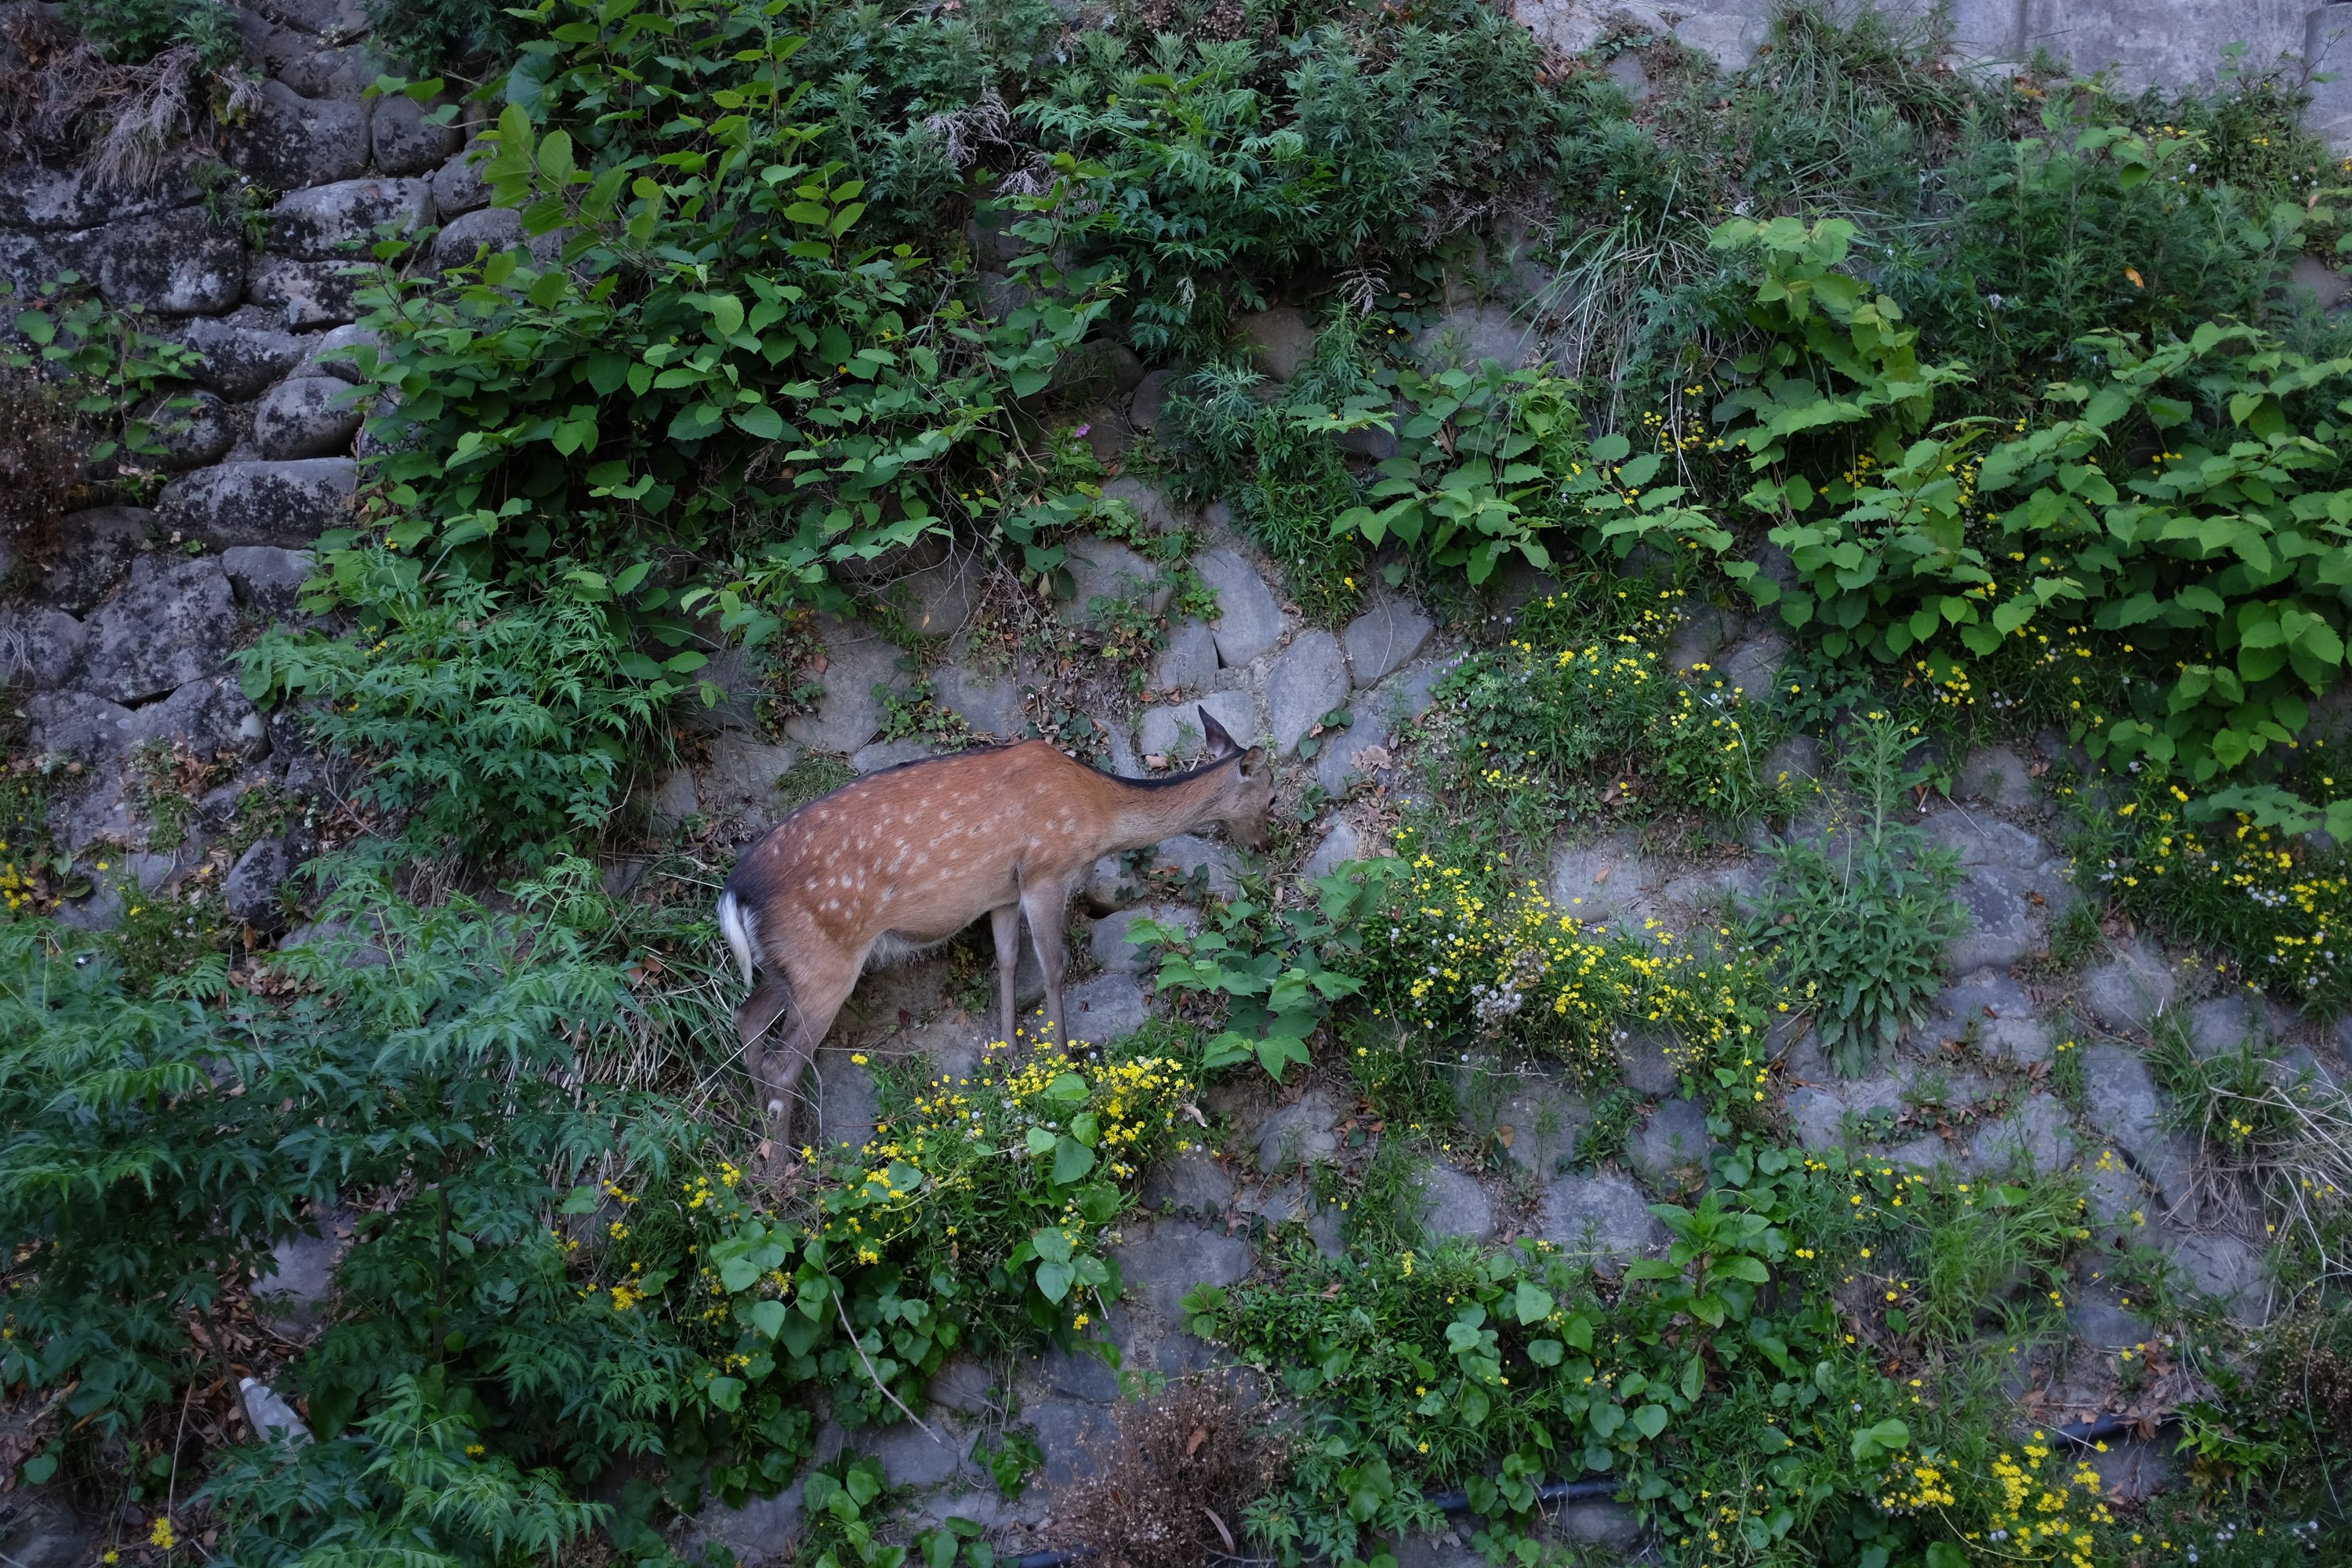 A sika deer stands between flowering plants on a steep wall of rocks.